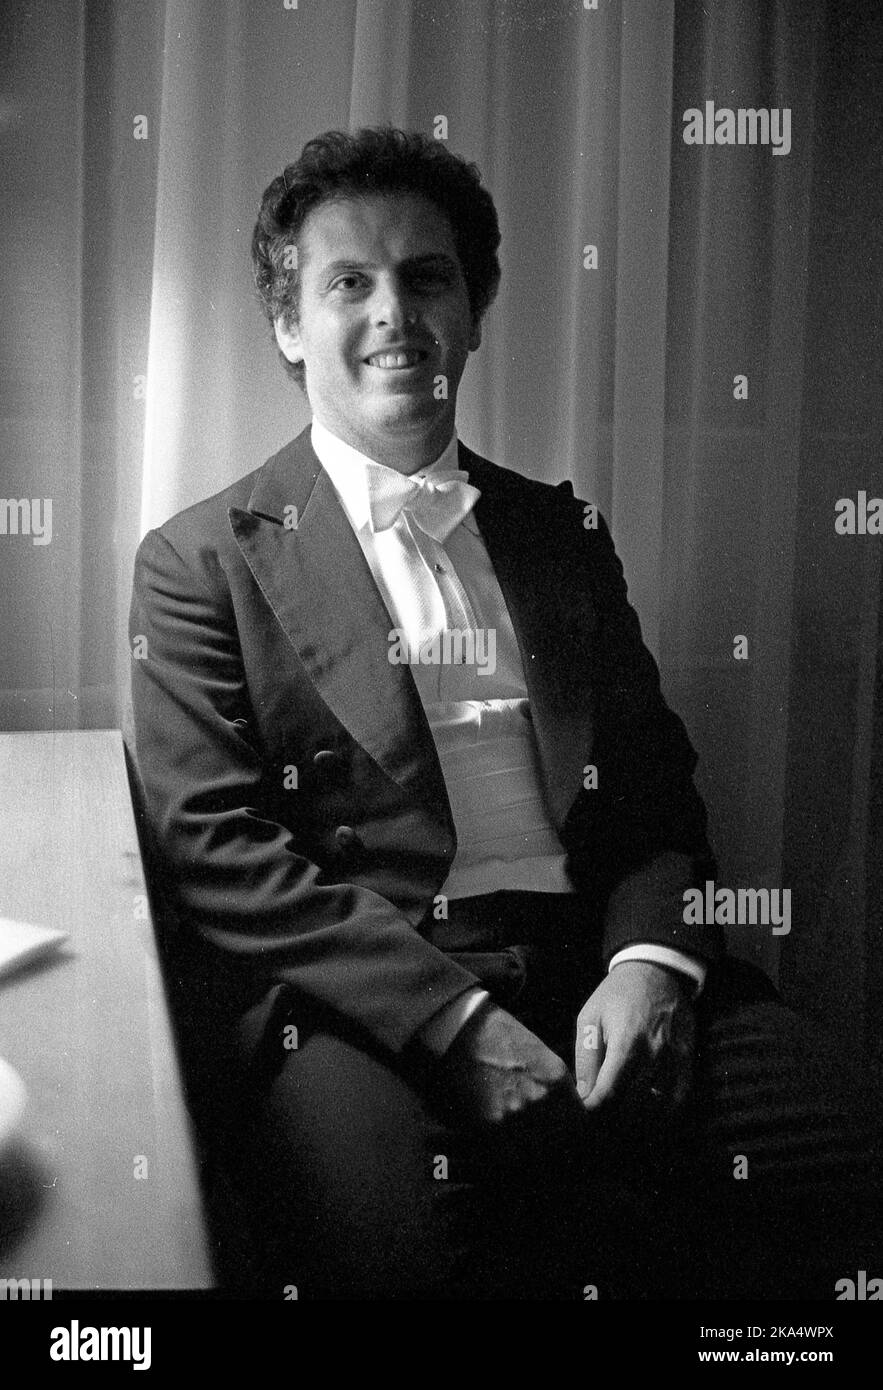 Daniel Barenboim, pianista e direttore d'orchestra argentino-israeliano, dopo una performance con l'Orchestre de Paris al Theatre du Champs Elysees, París, Francia, 1978 Foto Stock